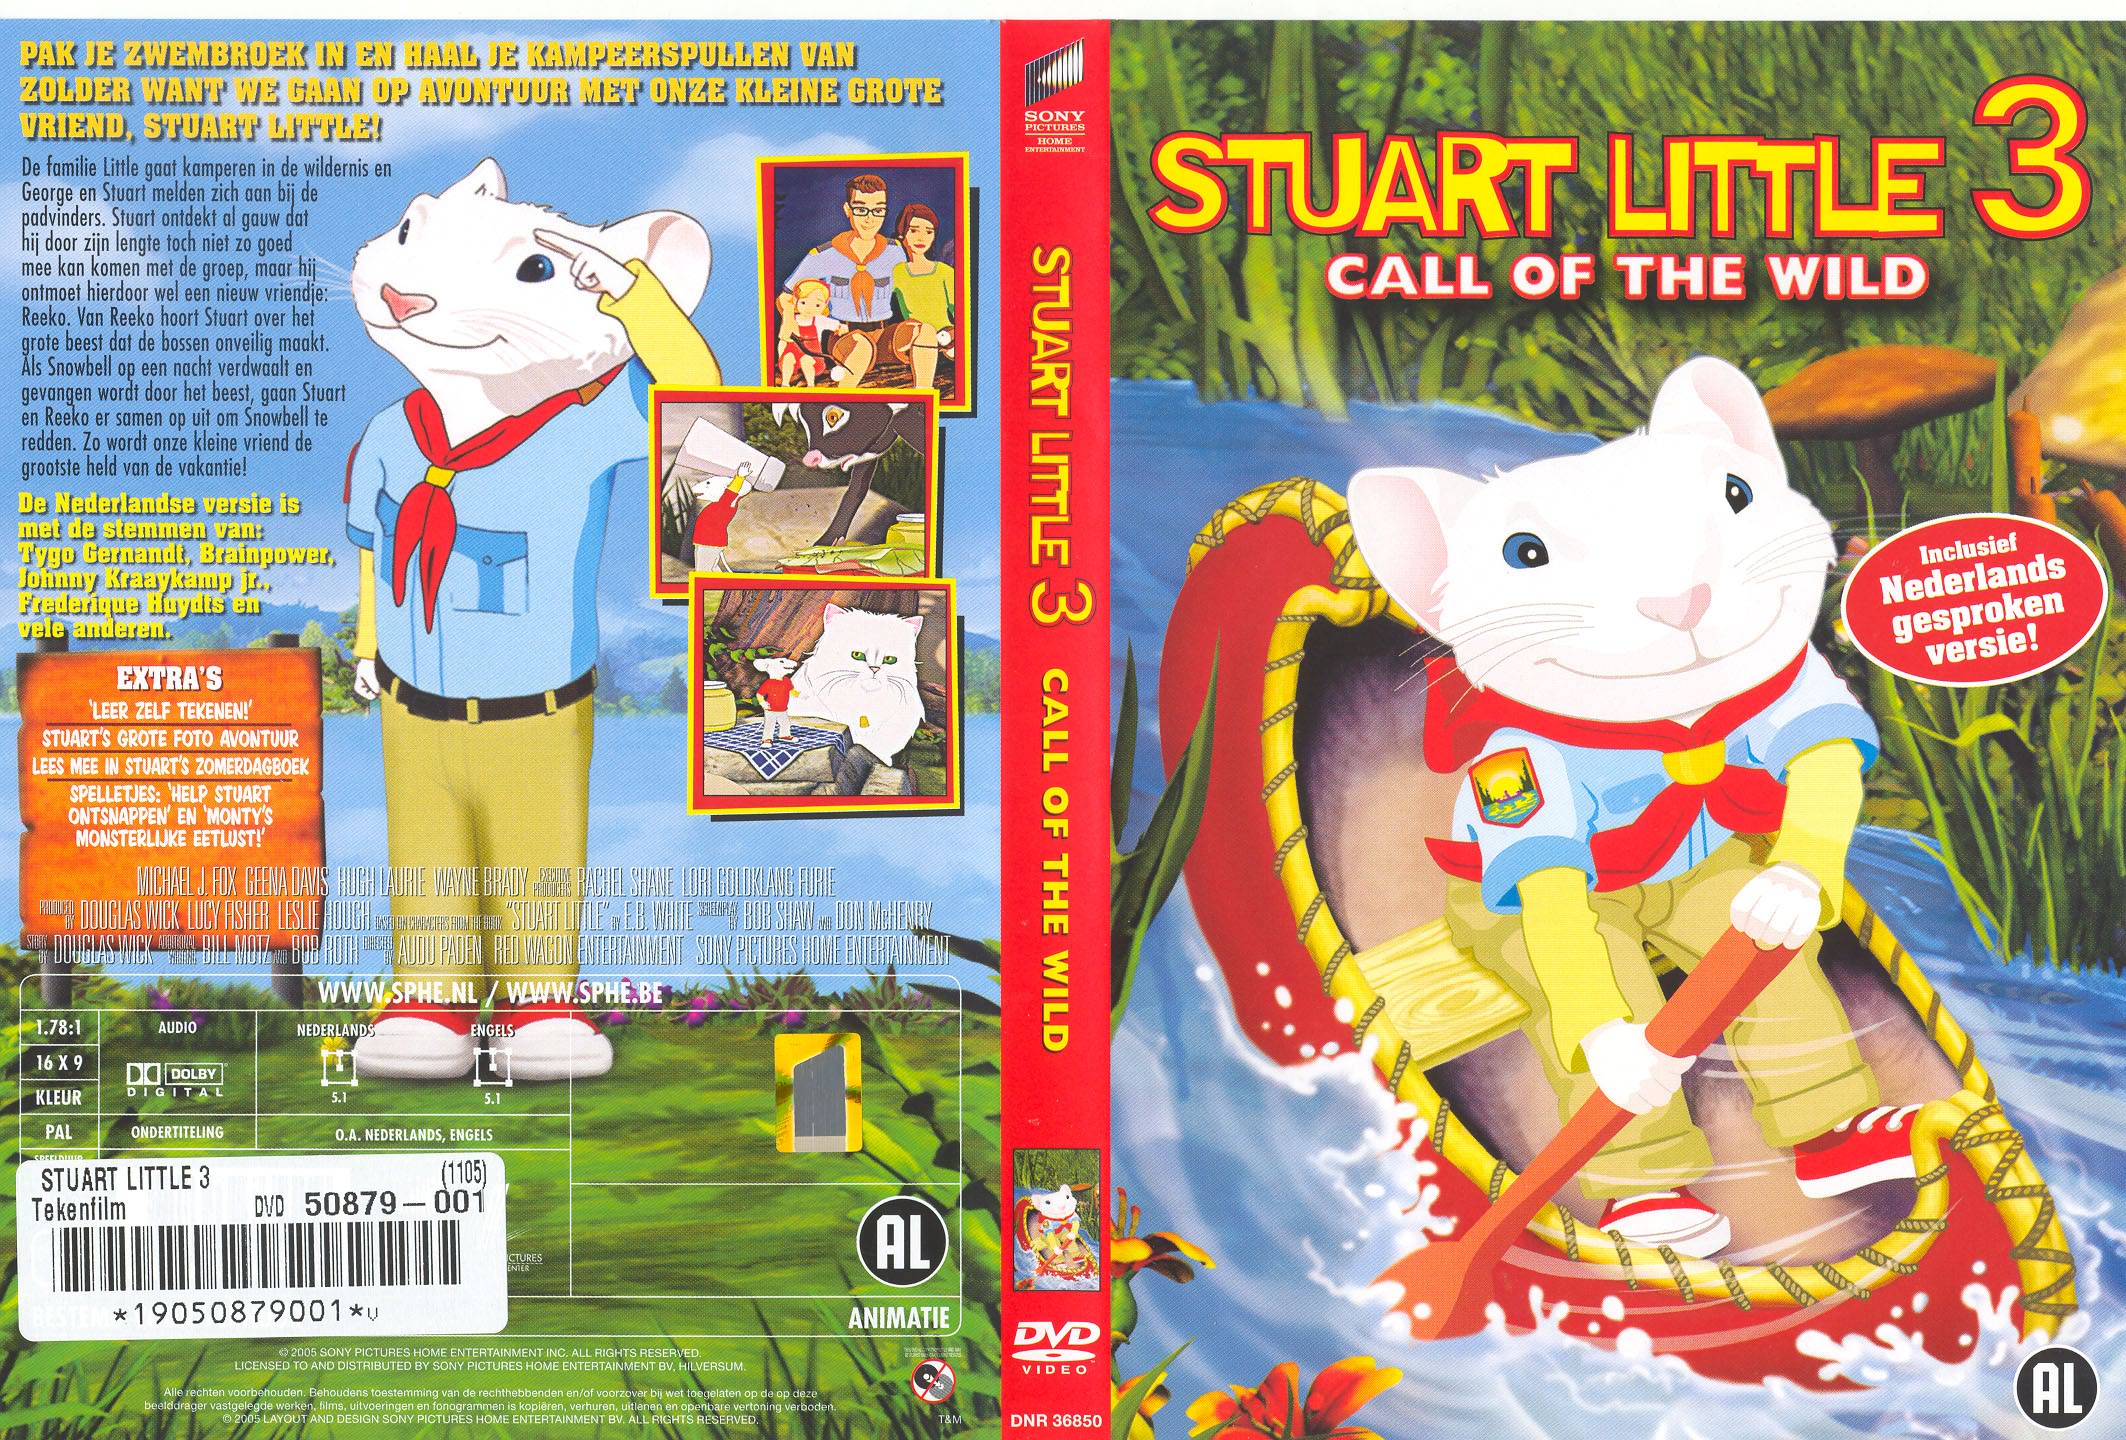 Stuart Little 3